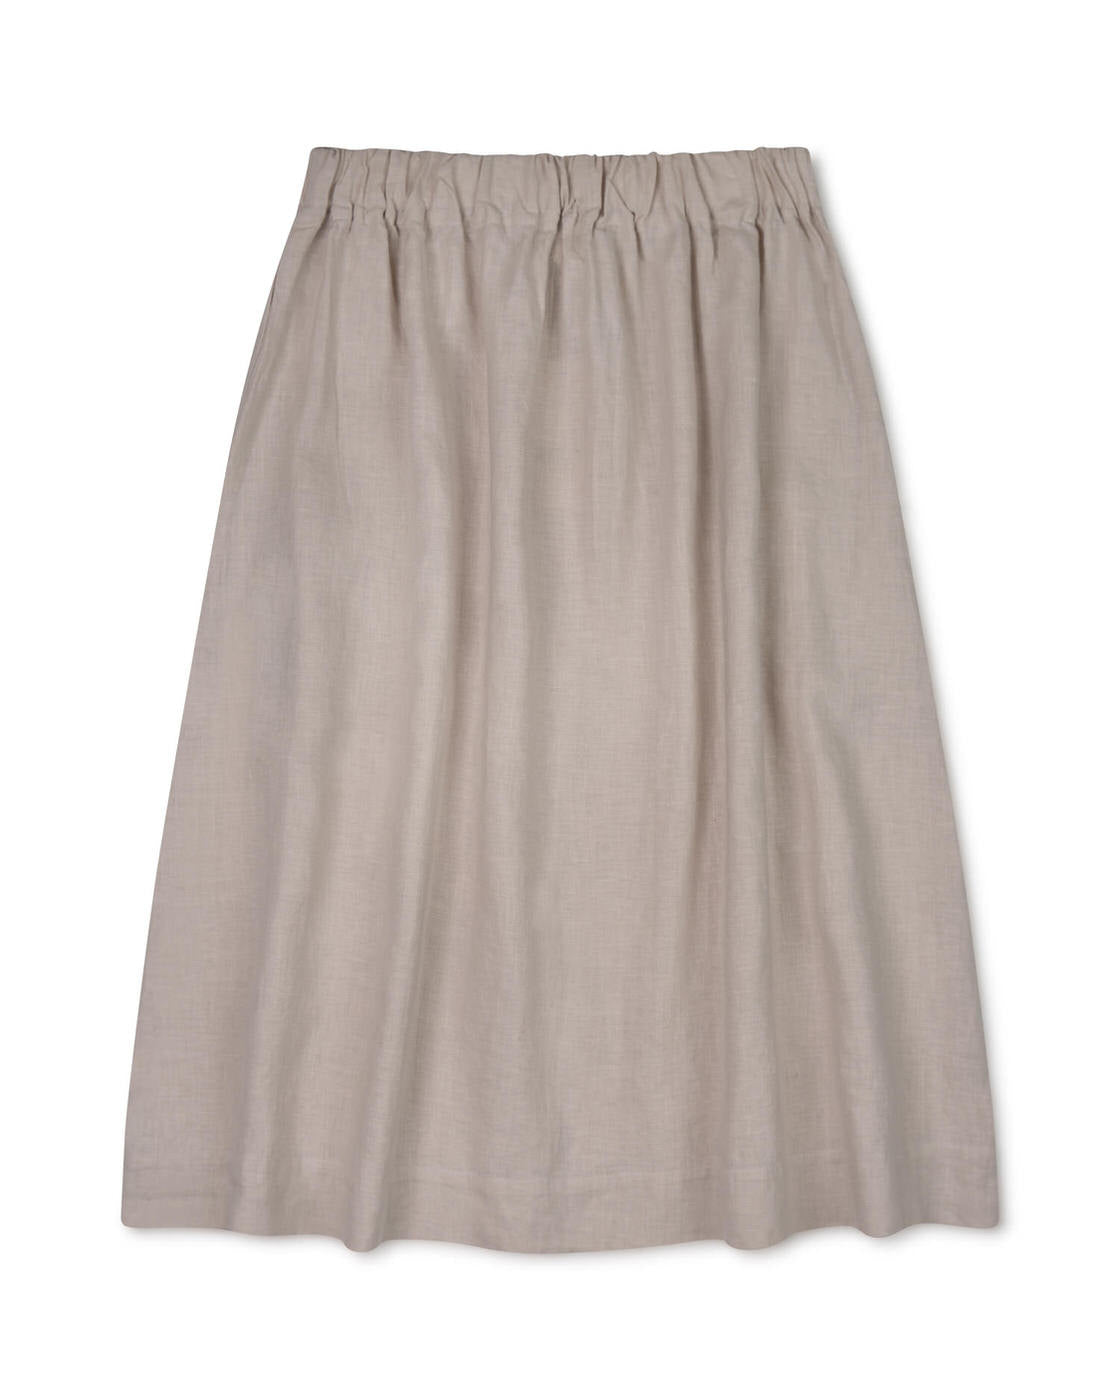 Light gray midi skirt pale clay made of linen by Matona